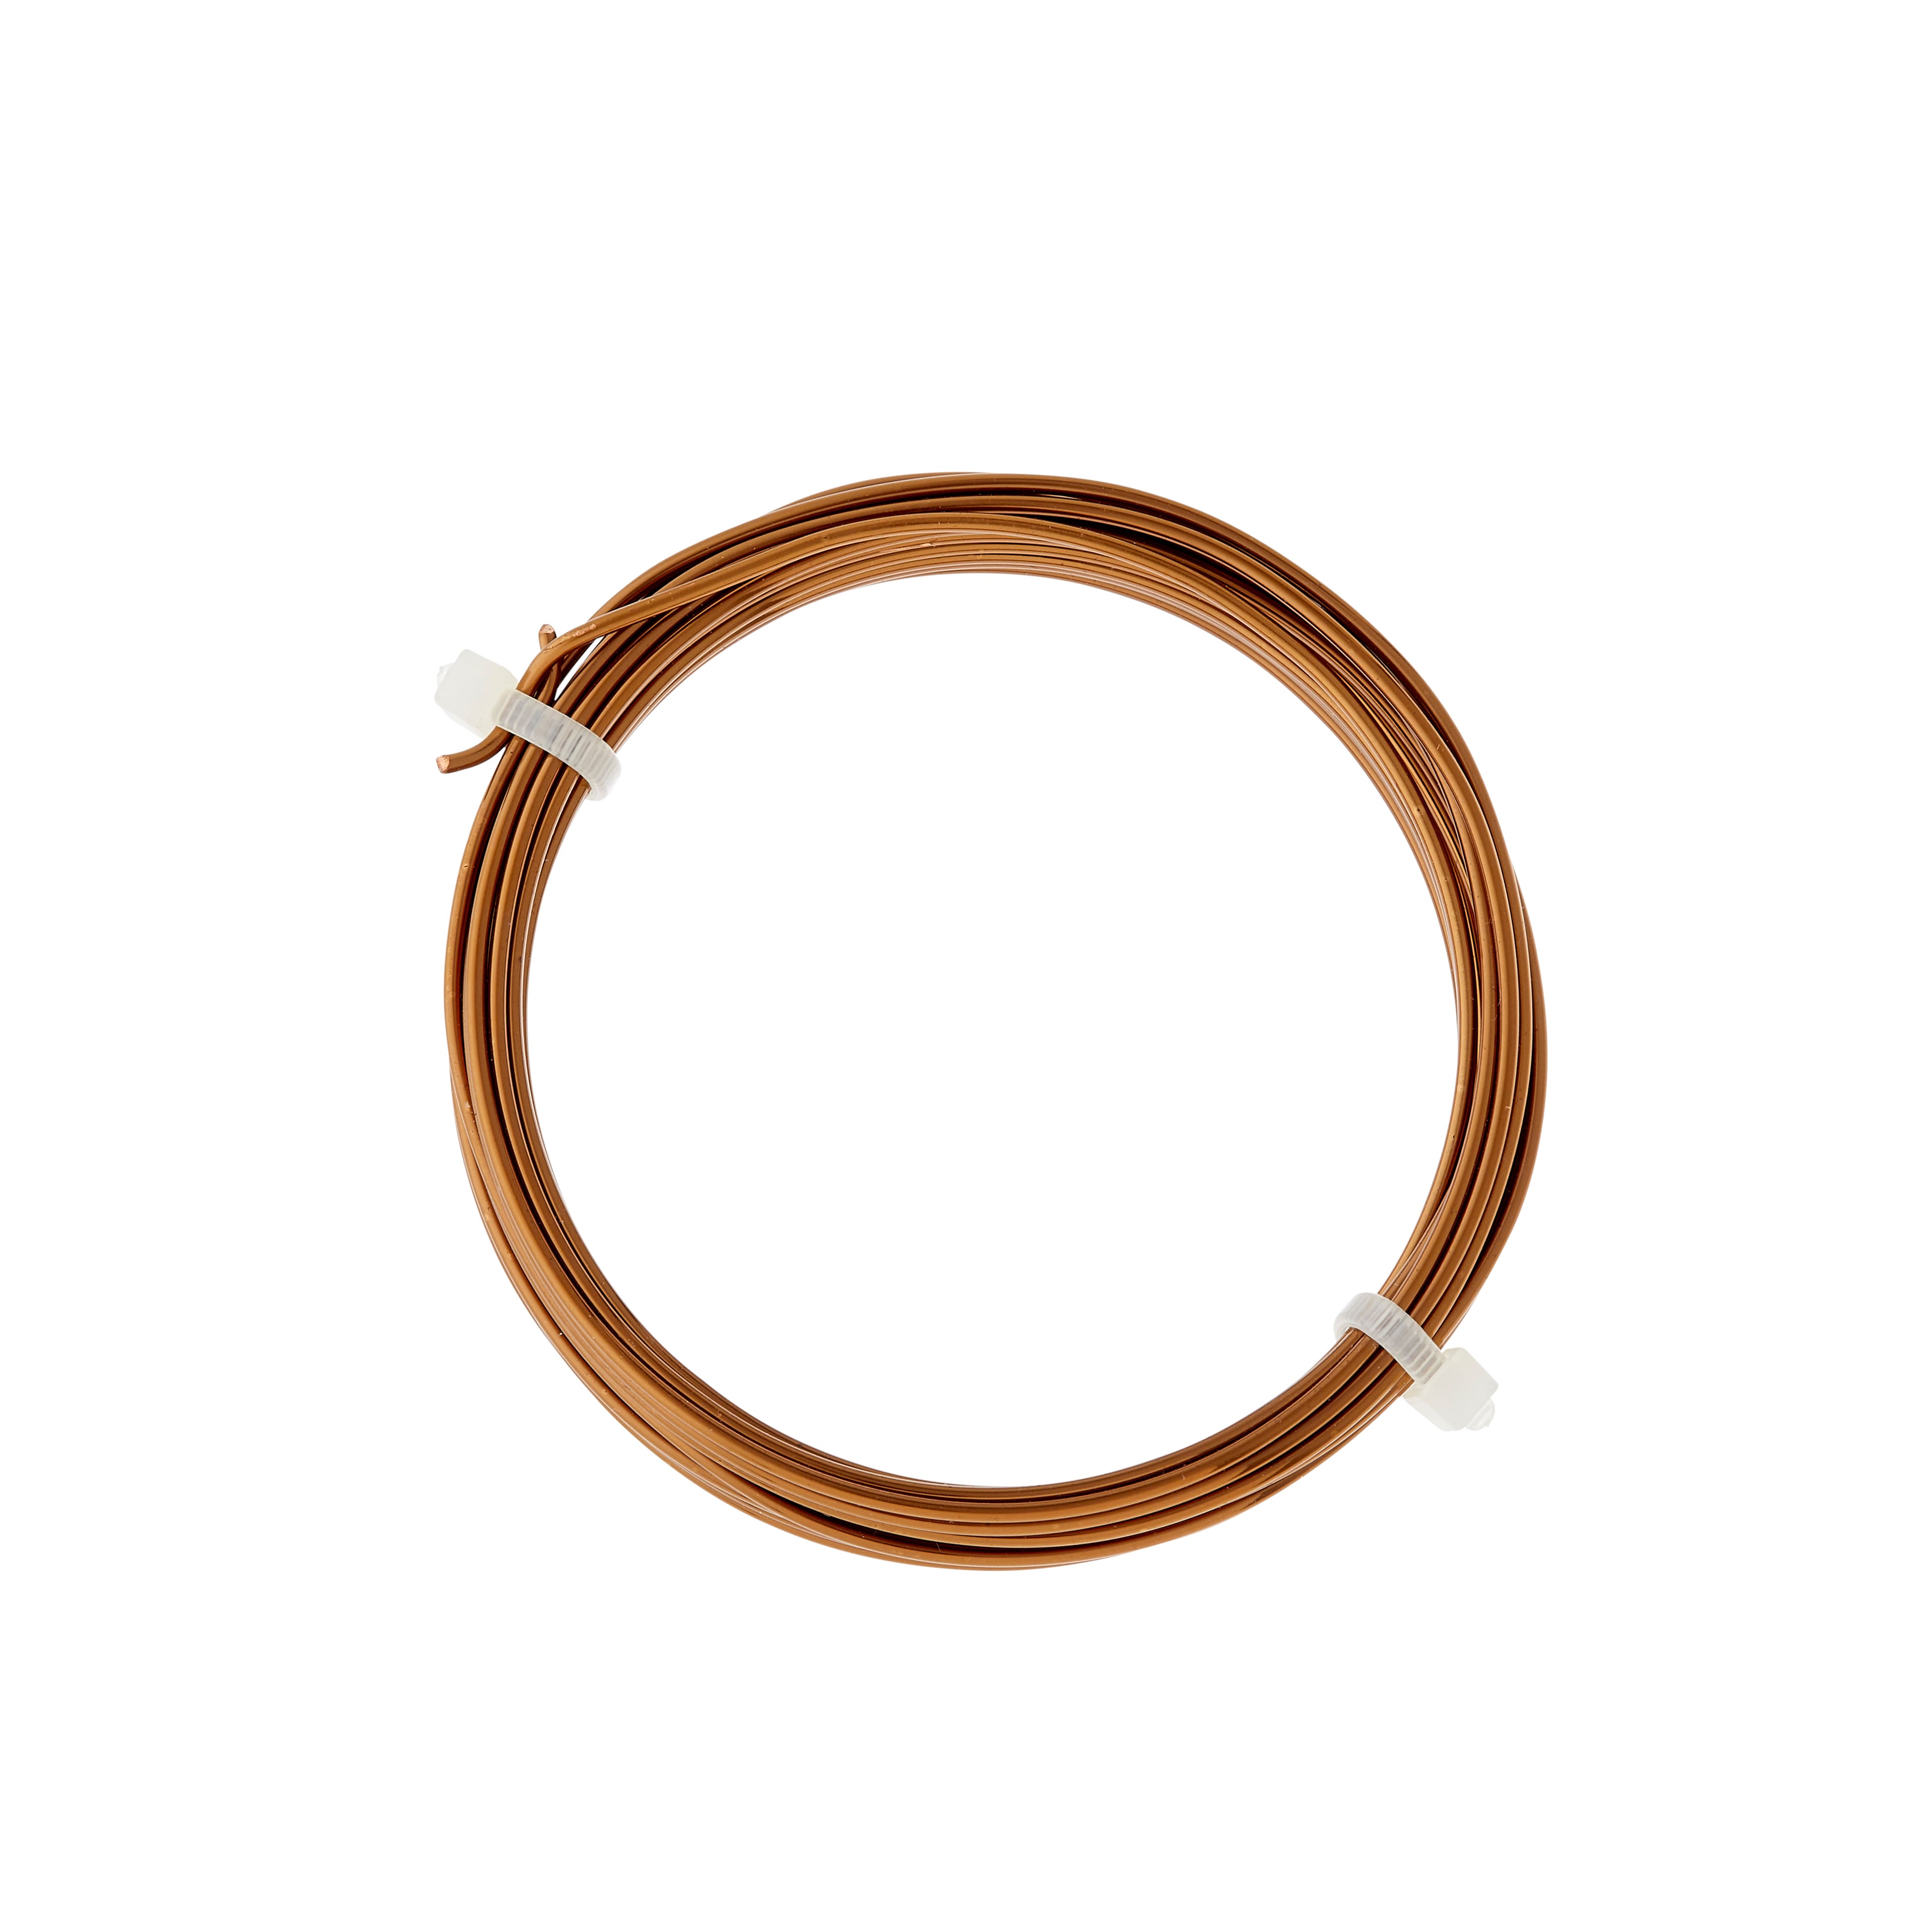 Copper Wire, 16 Gauge ROUND Dead Soft, Copper Jewelry Wire,10 Feet, 003